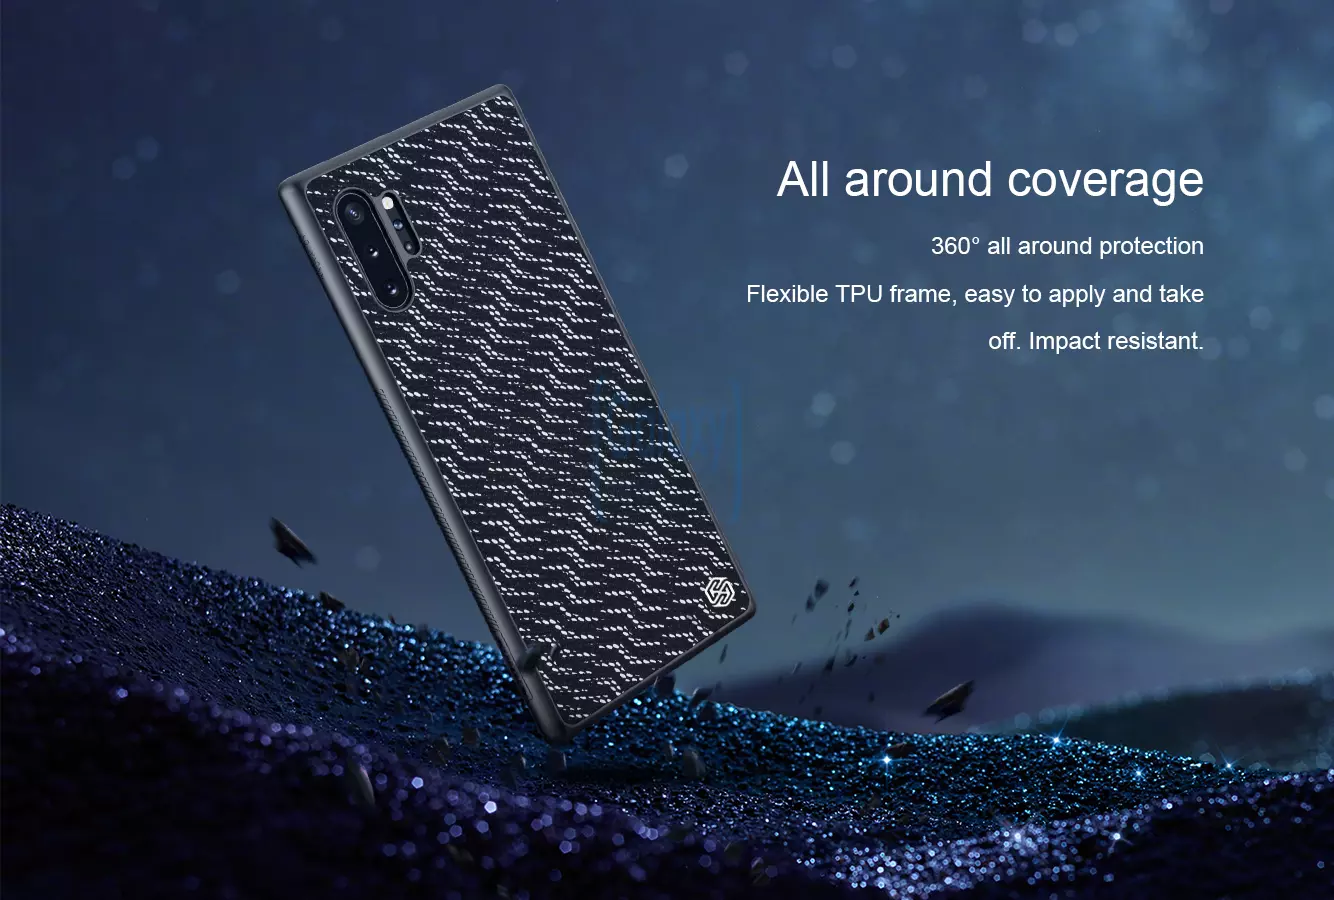 Чехол бампер Nillkin Twinkle Case для Samsung Galaxy Note 10 Plus Silvery (Серебристый)